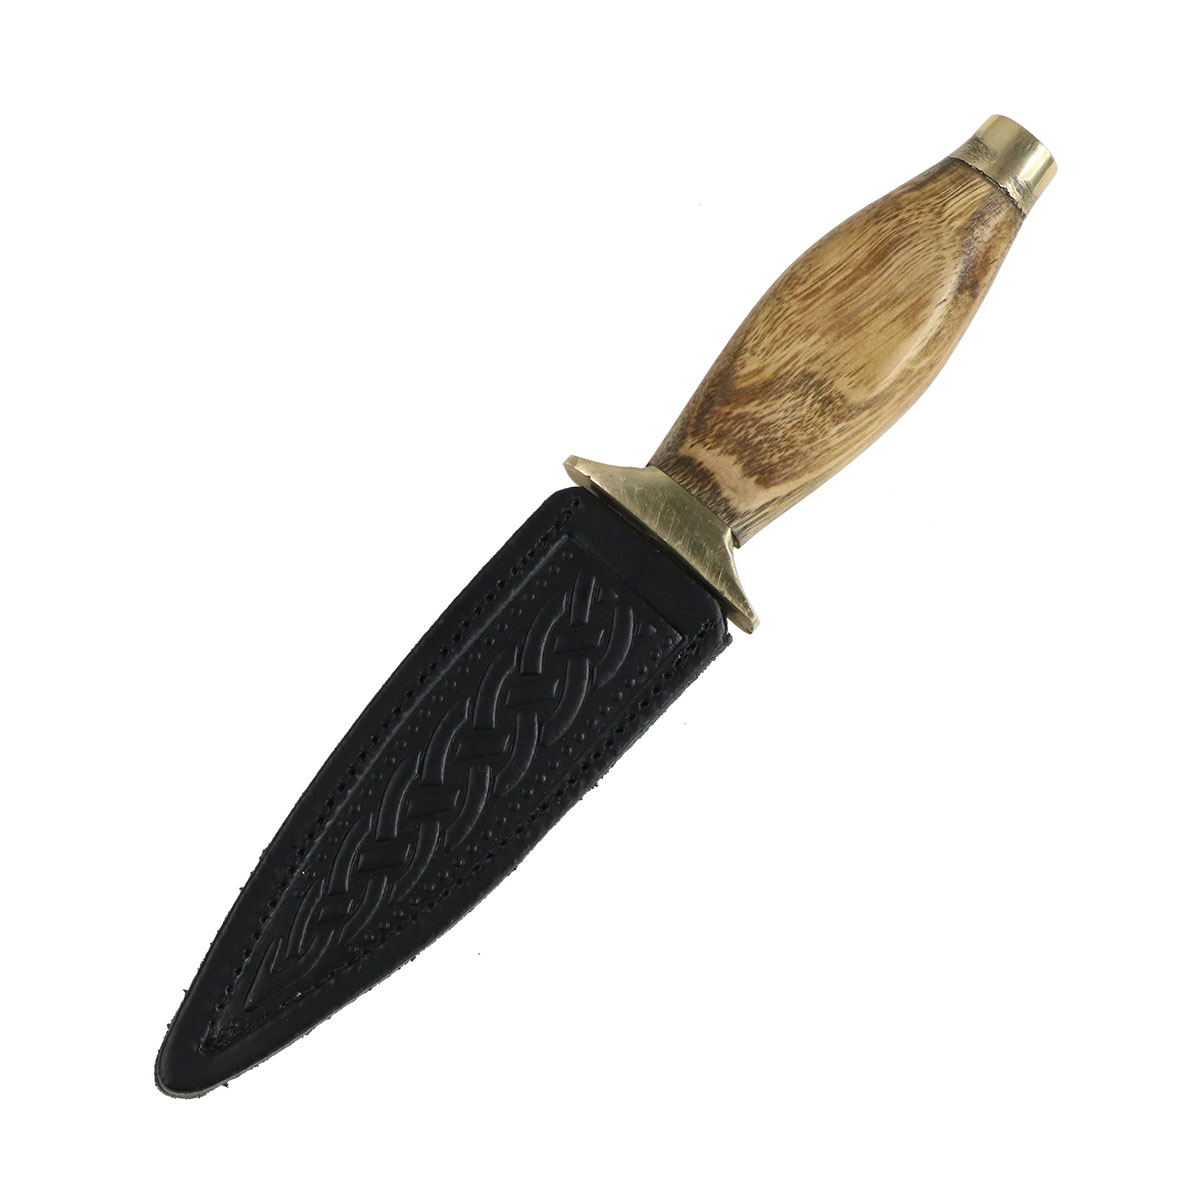 A Rustic Wood Handled Sgian Dubh - Black Sheath knife on a white background.